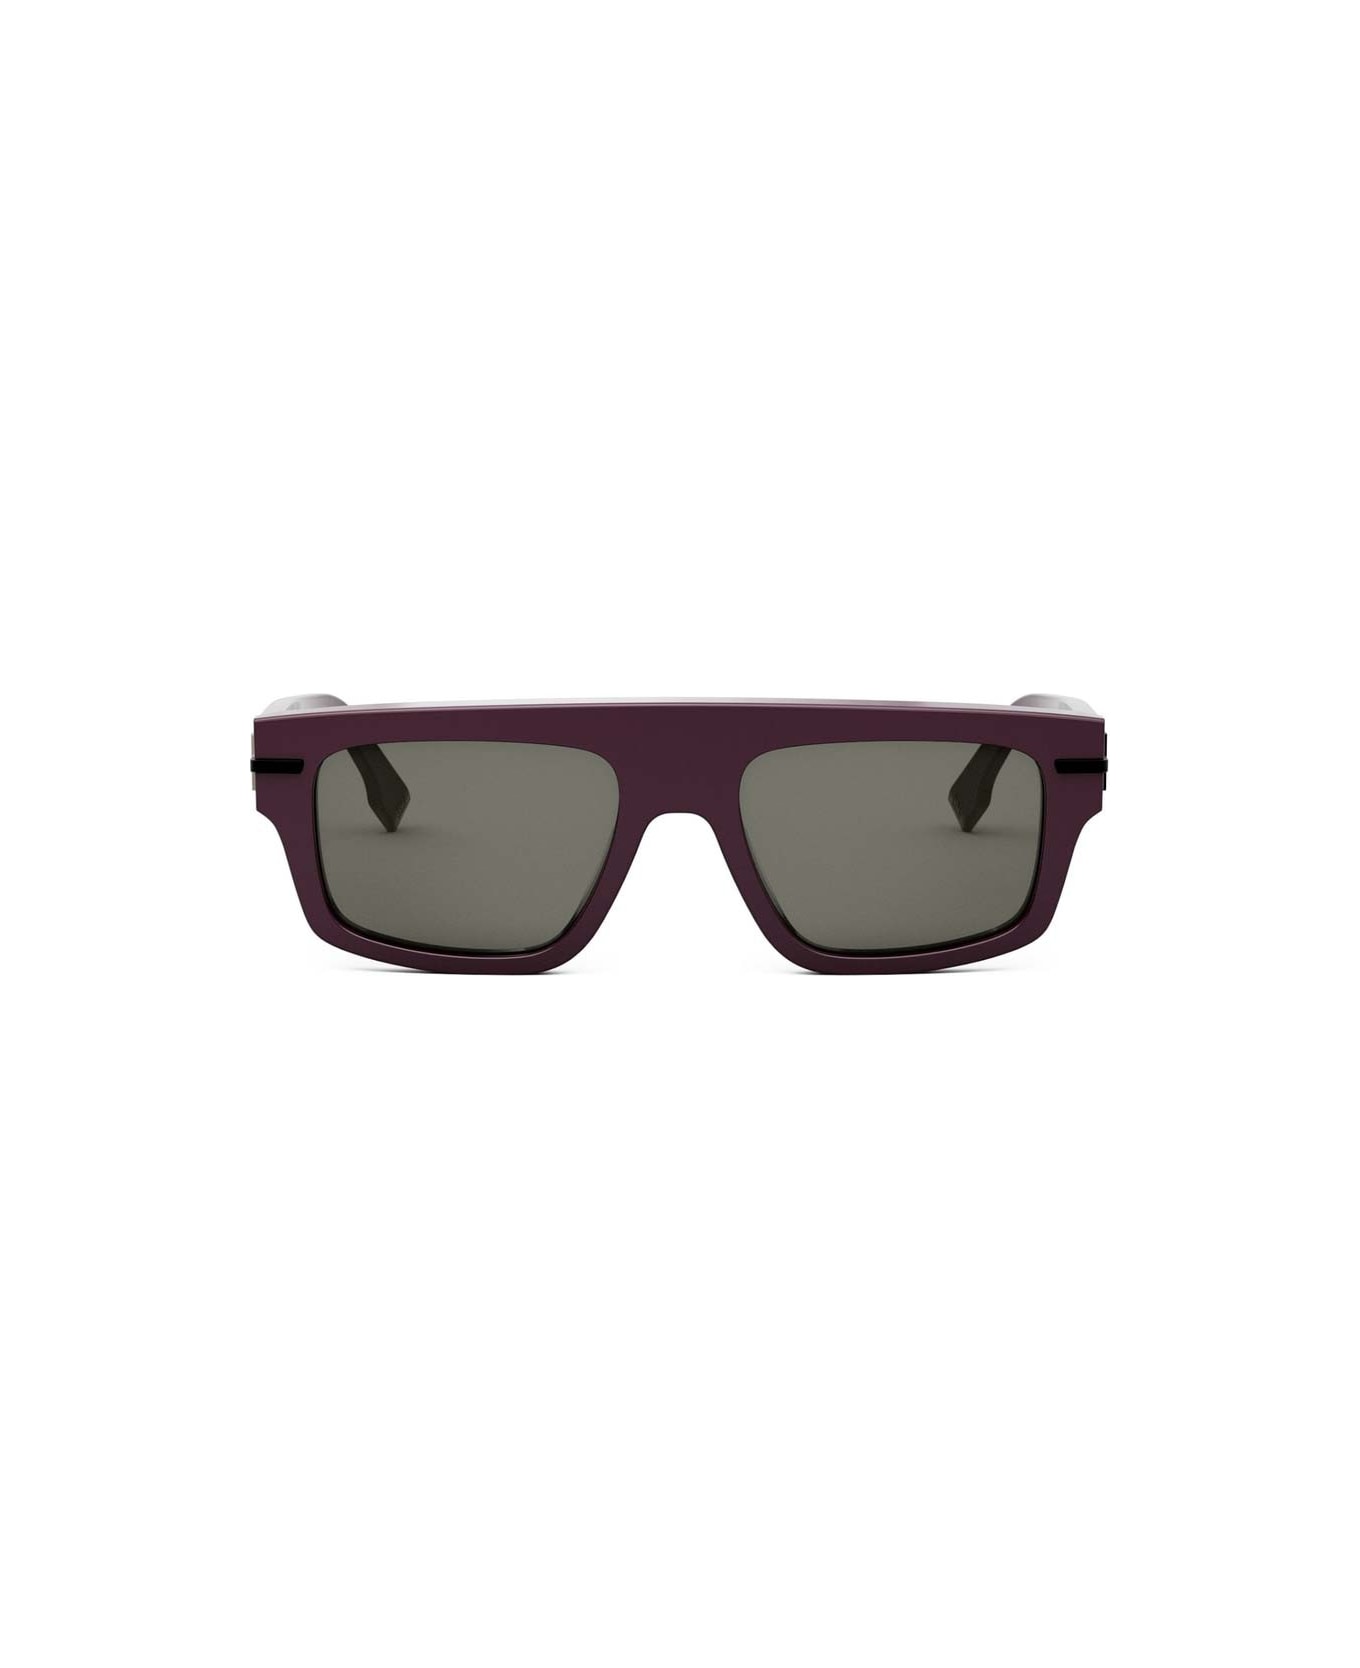 Fendi Eyewear Sunglasses - Bordeaux/Grigio